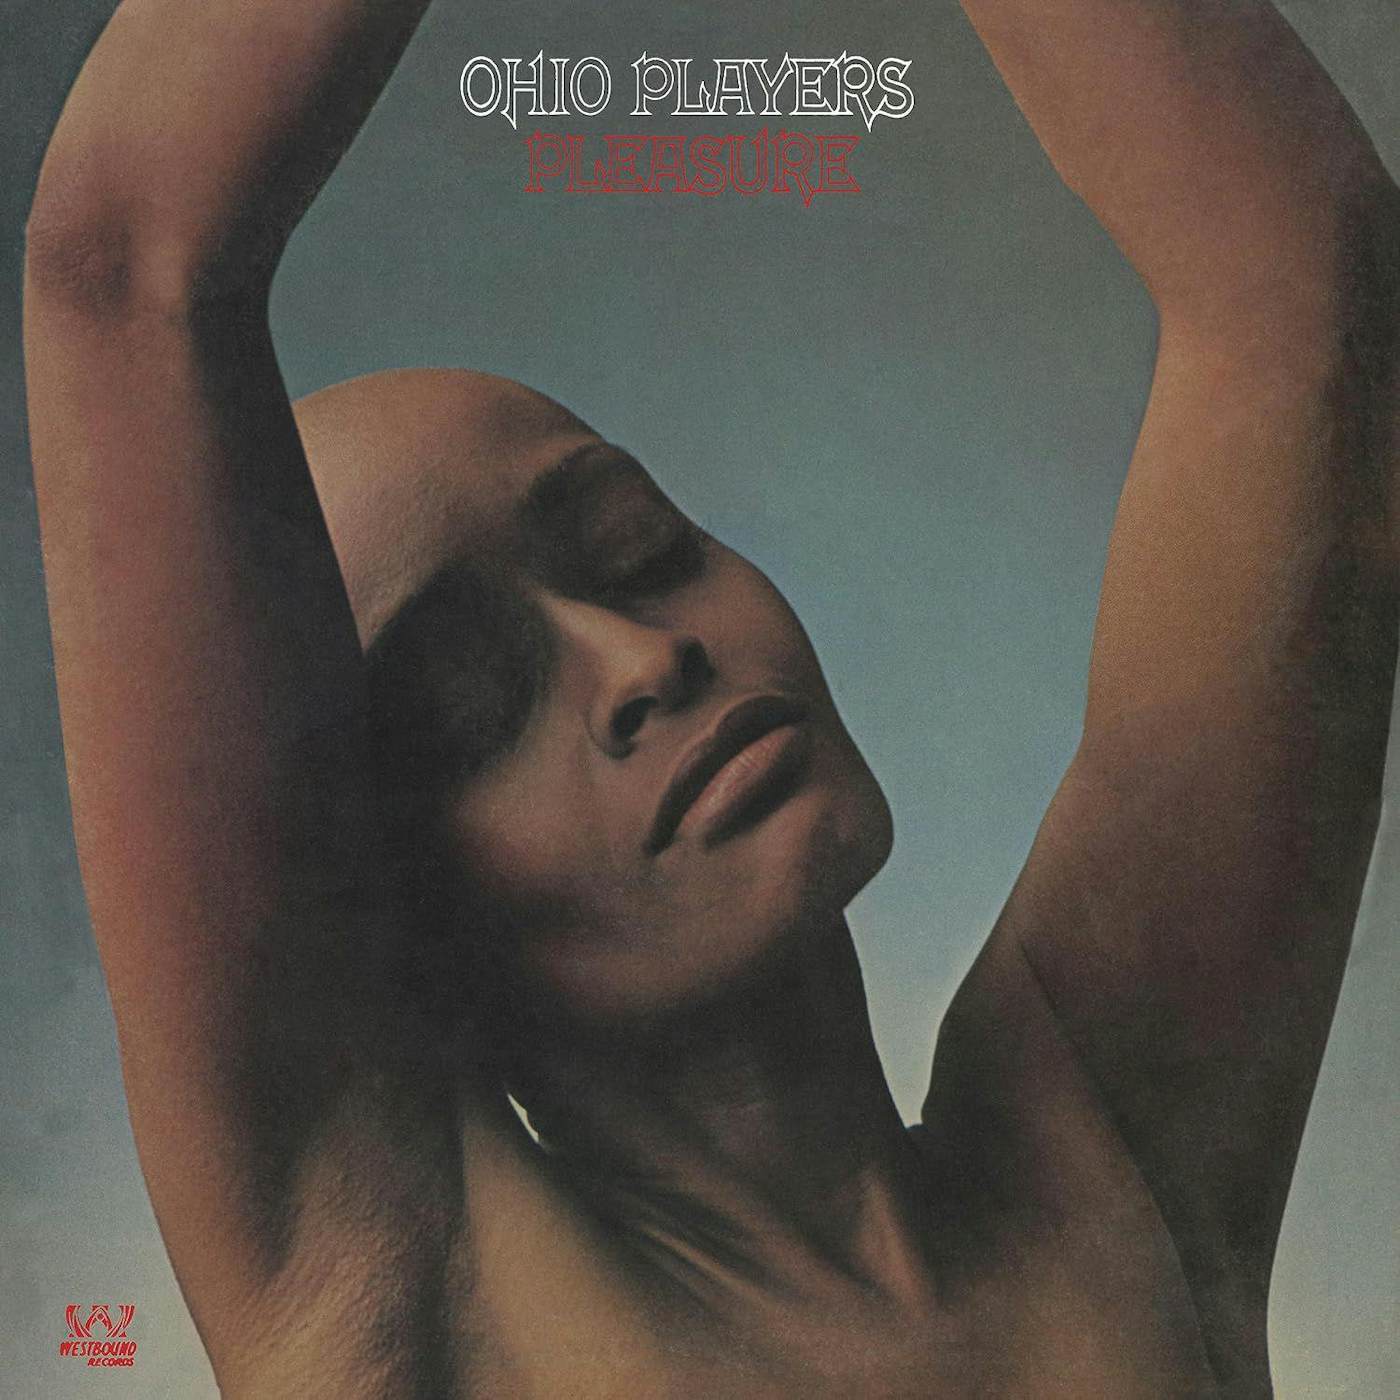 Ohio Players Pleasure (Silver) Vinyl Record